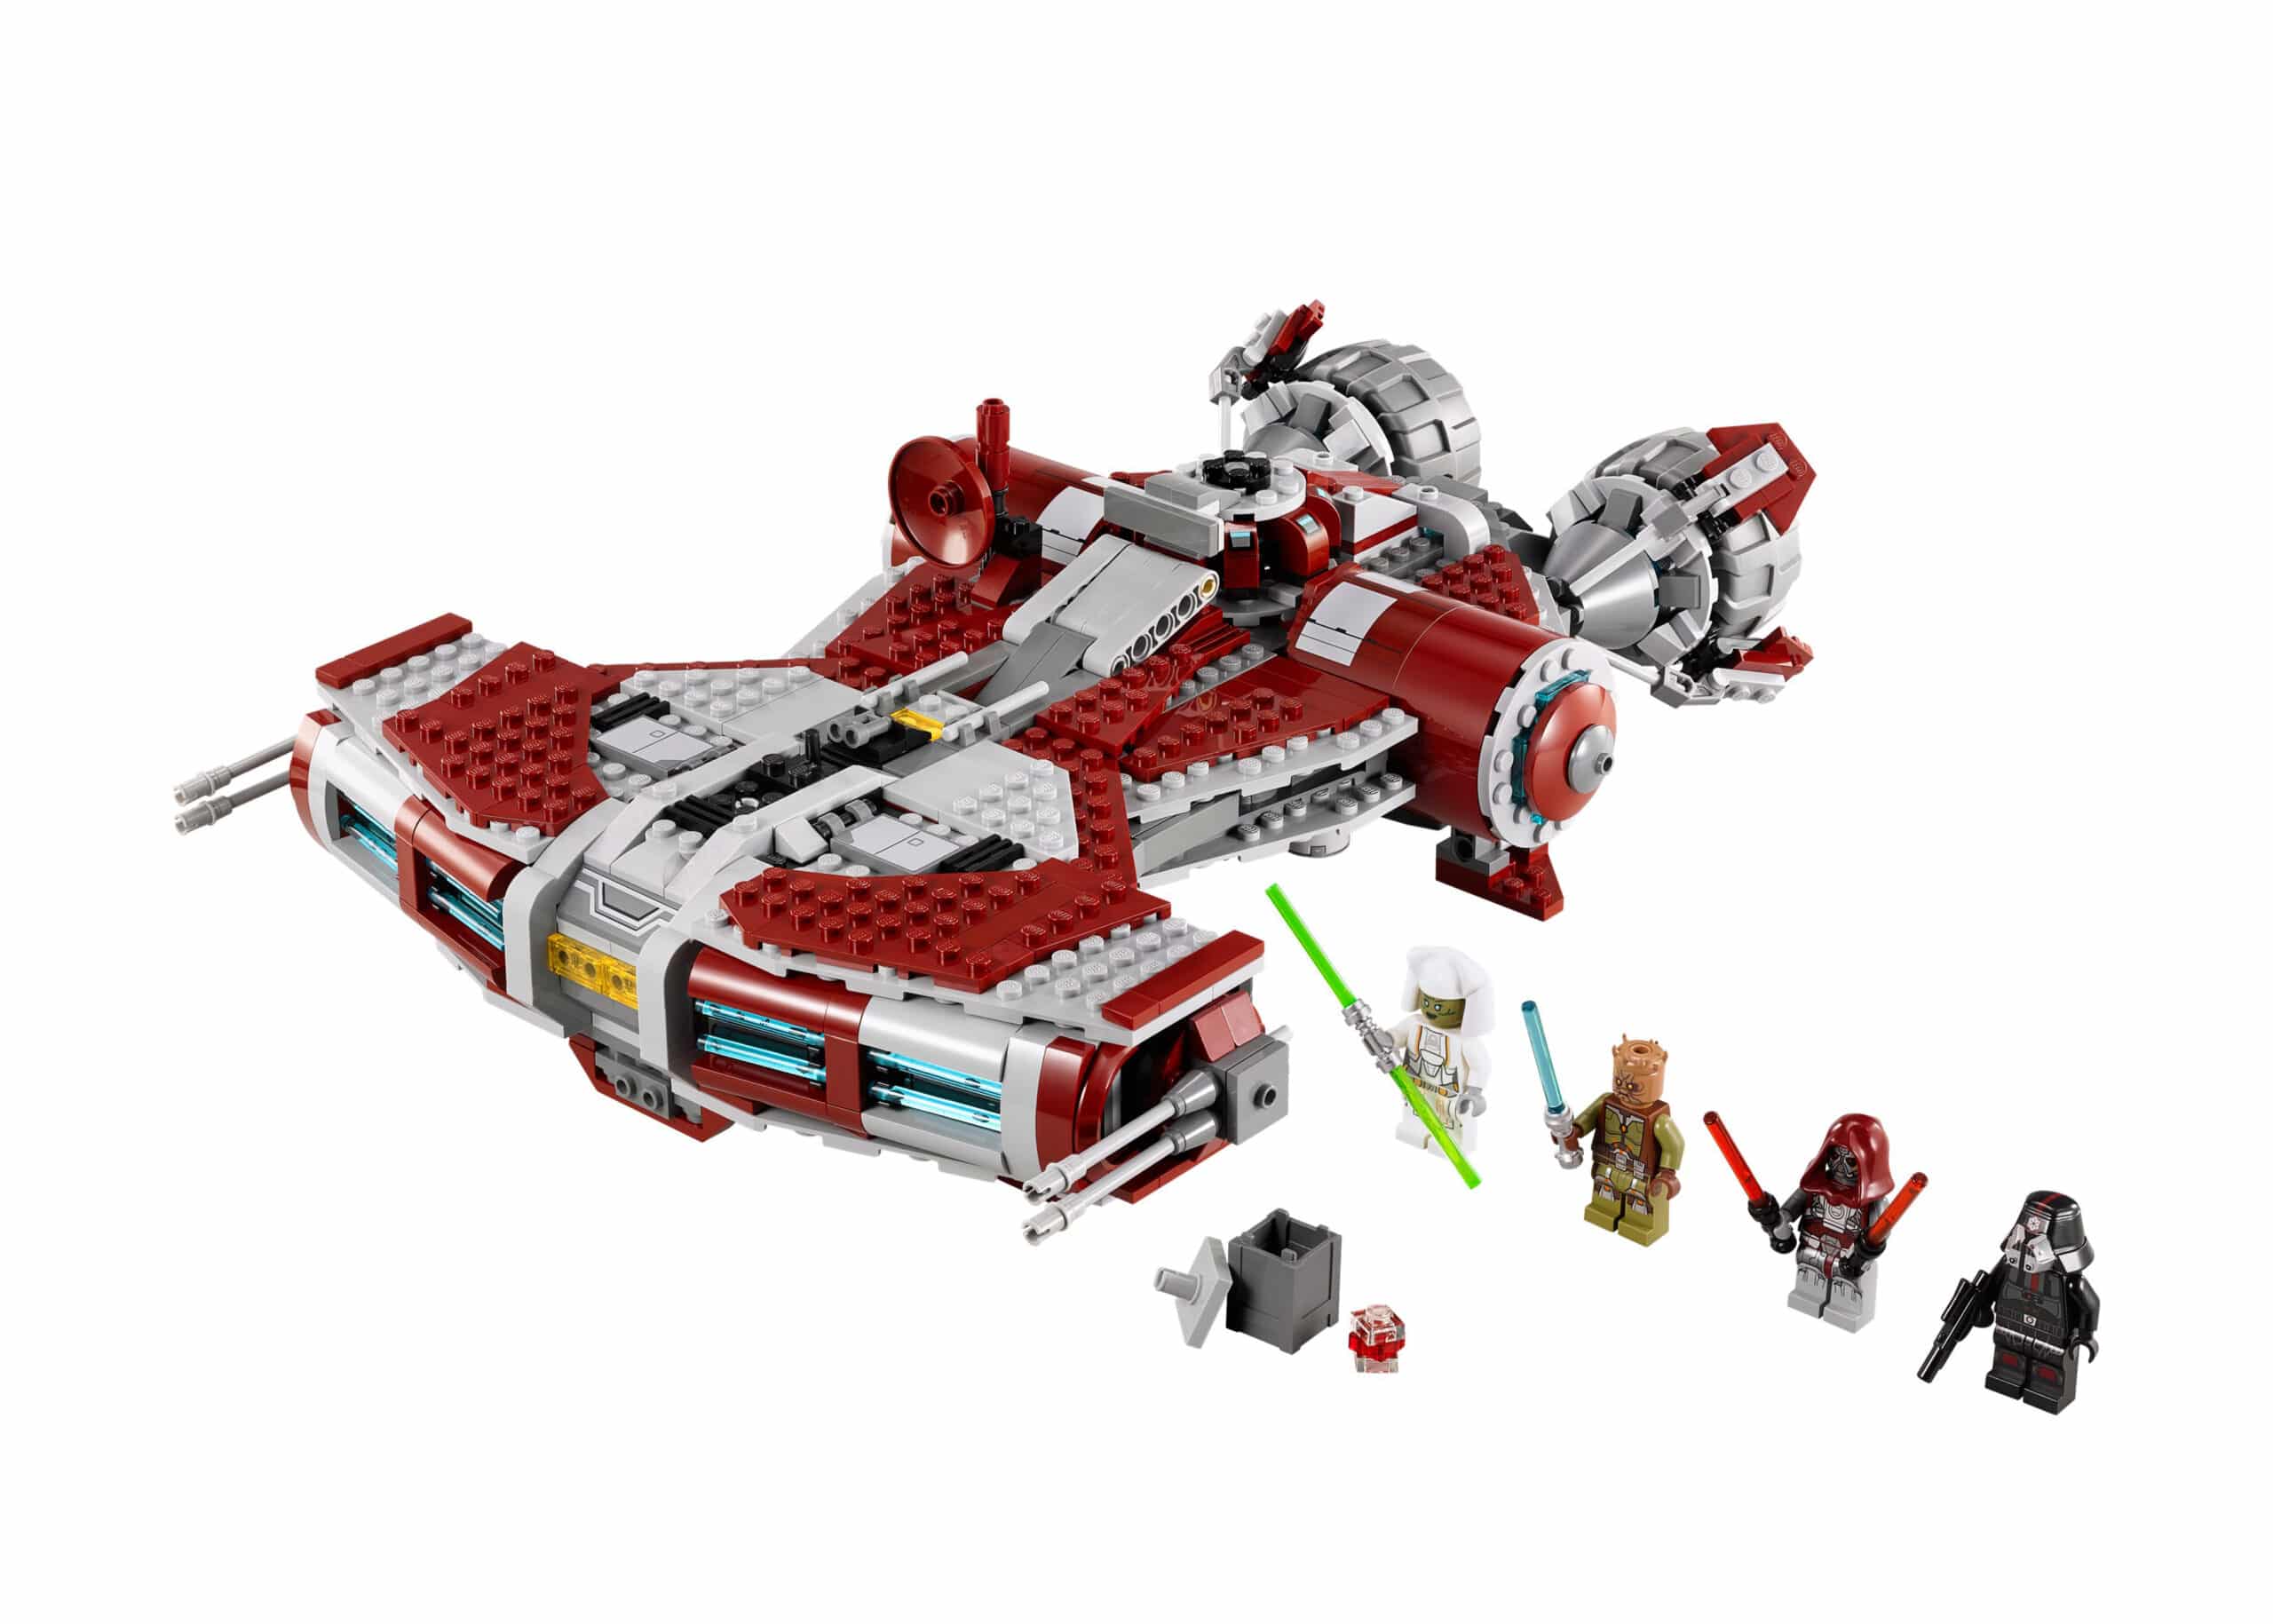 Corellian Defender Lego set